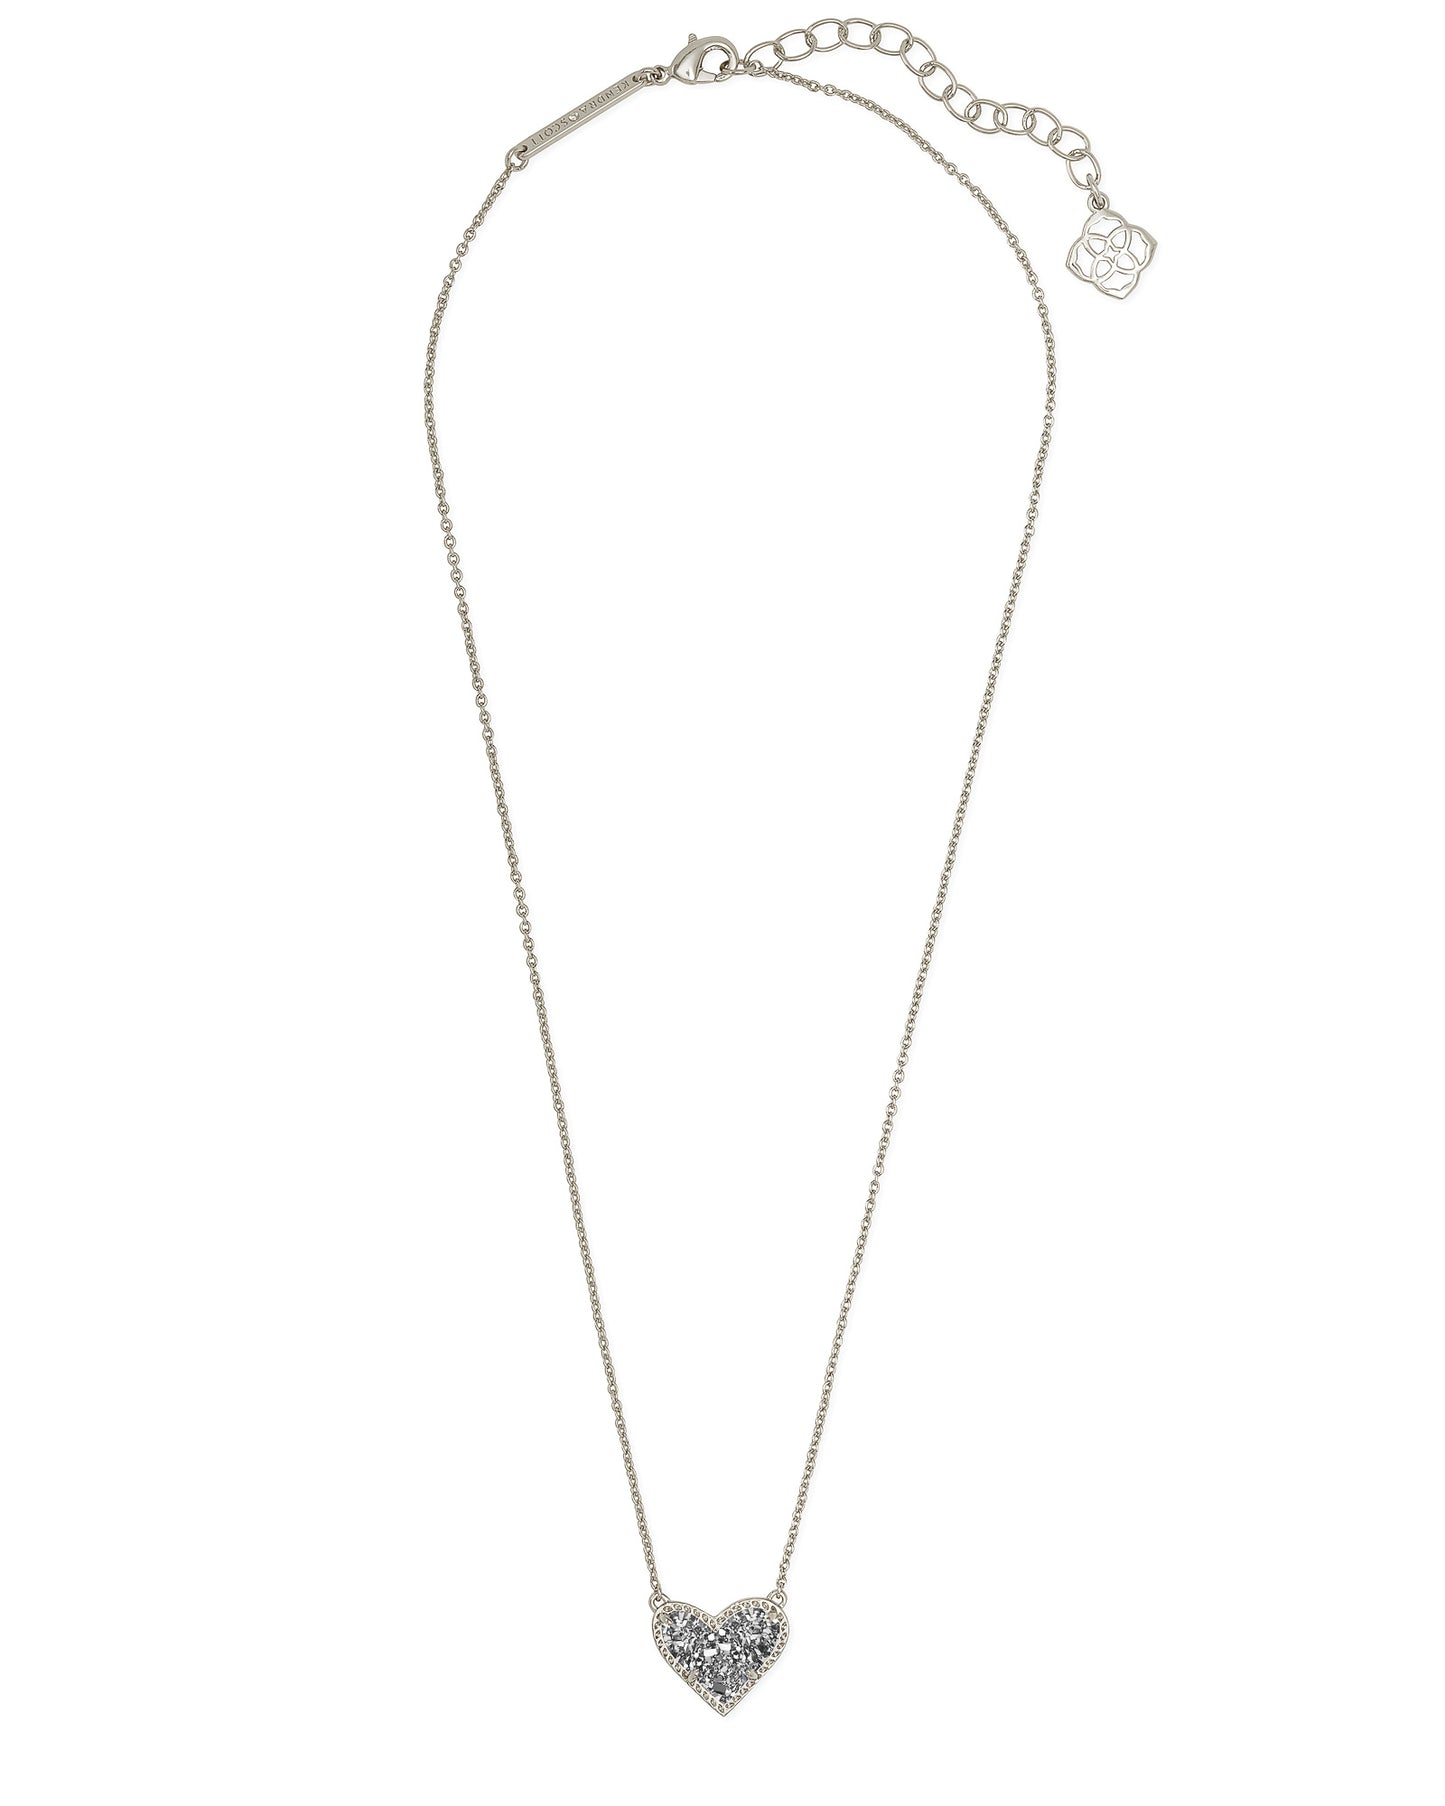 Ari Heart Silver Pendant Necklace In Platinum Drusy